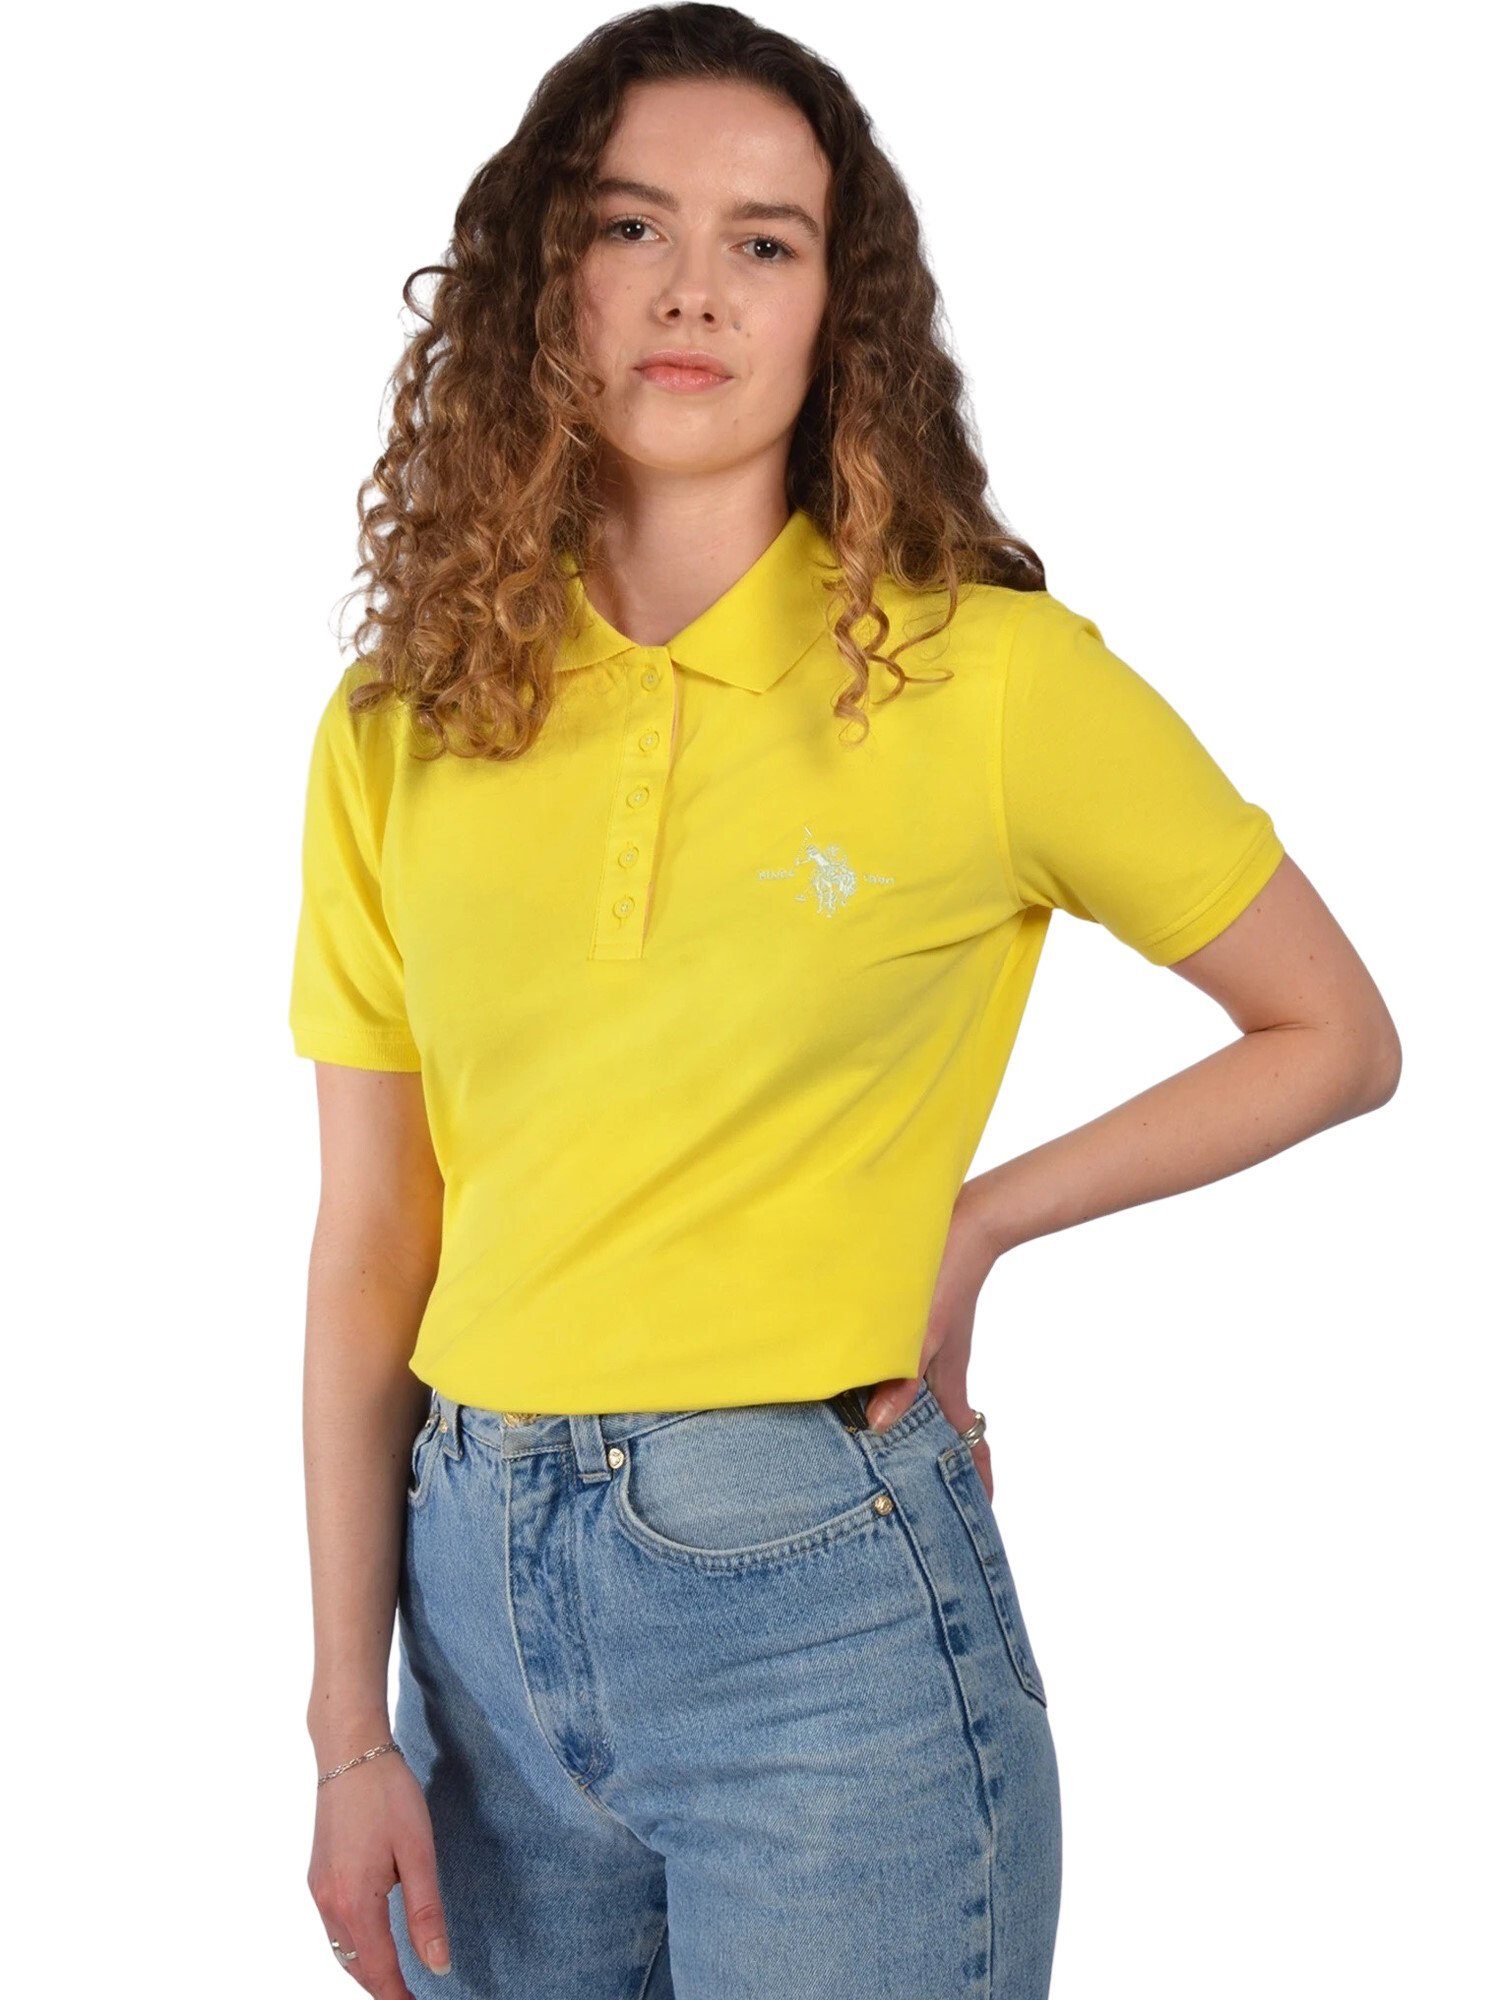 U.S. Polo Assn Poloshirt Shirt Poloshirt Shortsleeve gelb